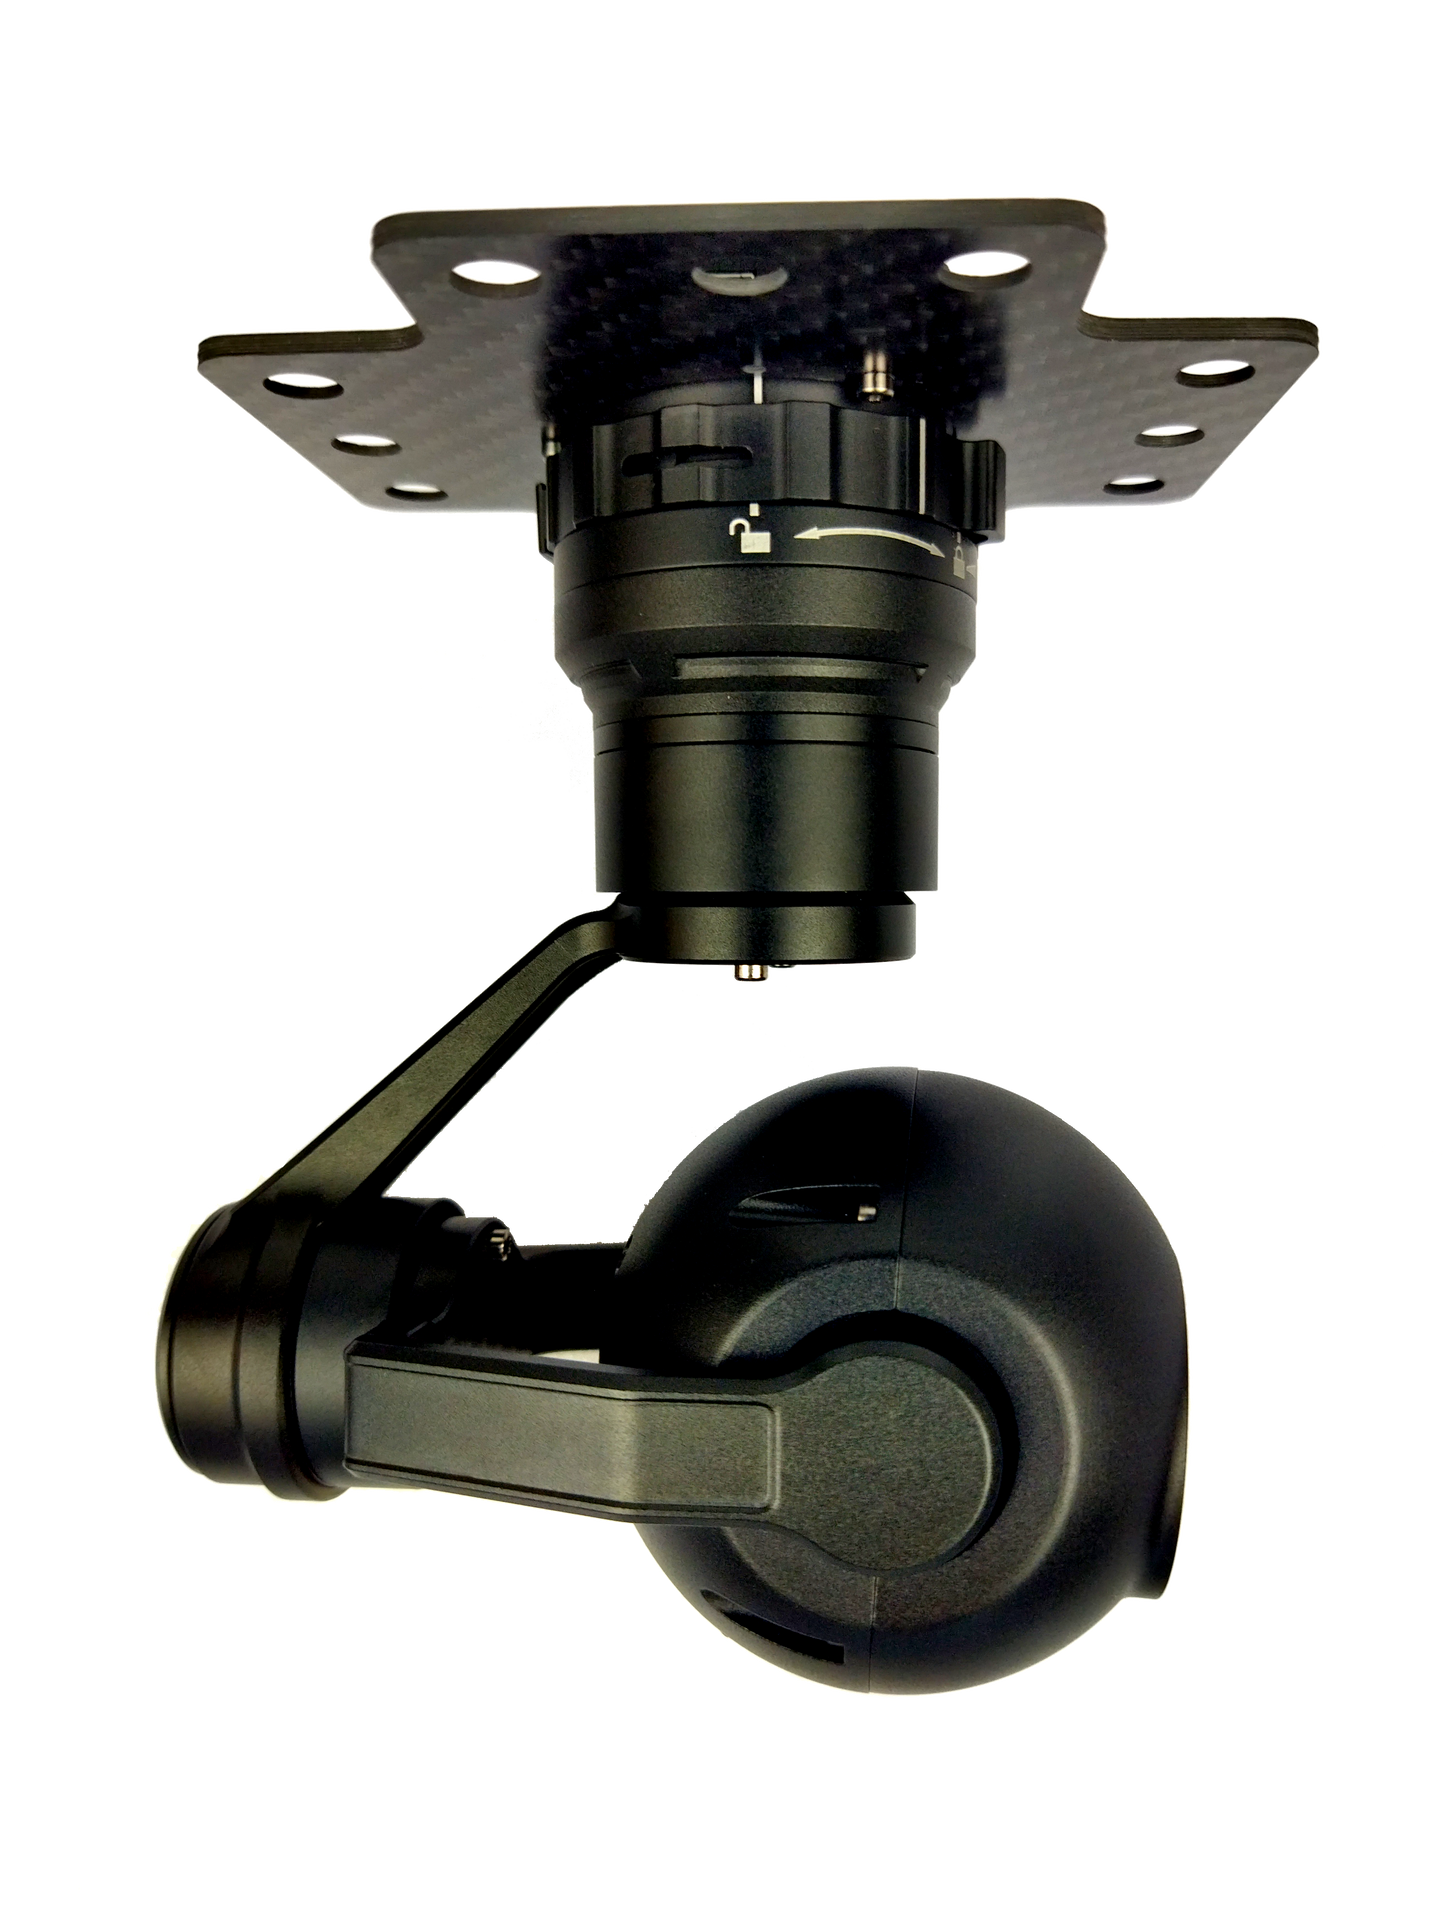 TOPOTEK KIP640G25 Thermal Camera Gimbal - 25mm Lens 640*512 Thermal Imager with 3-Axis Gimbal for UAV Drone